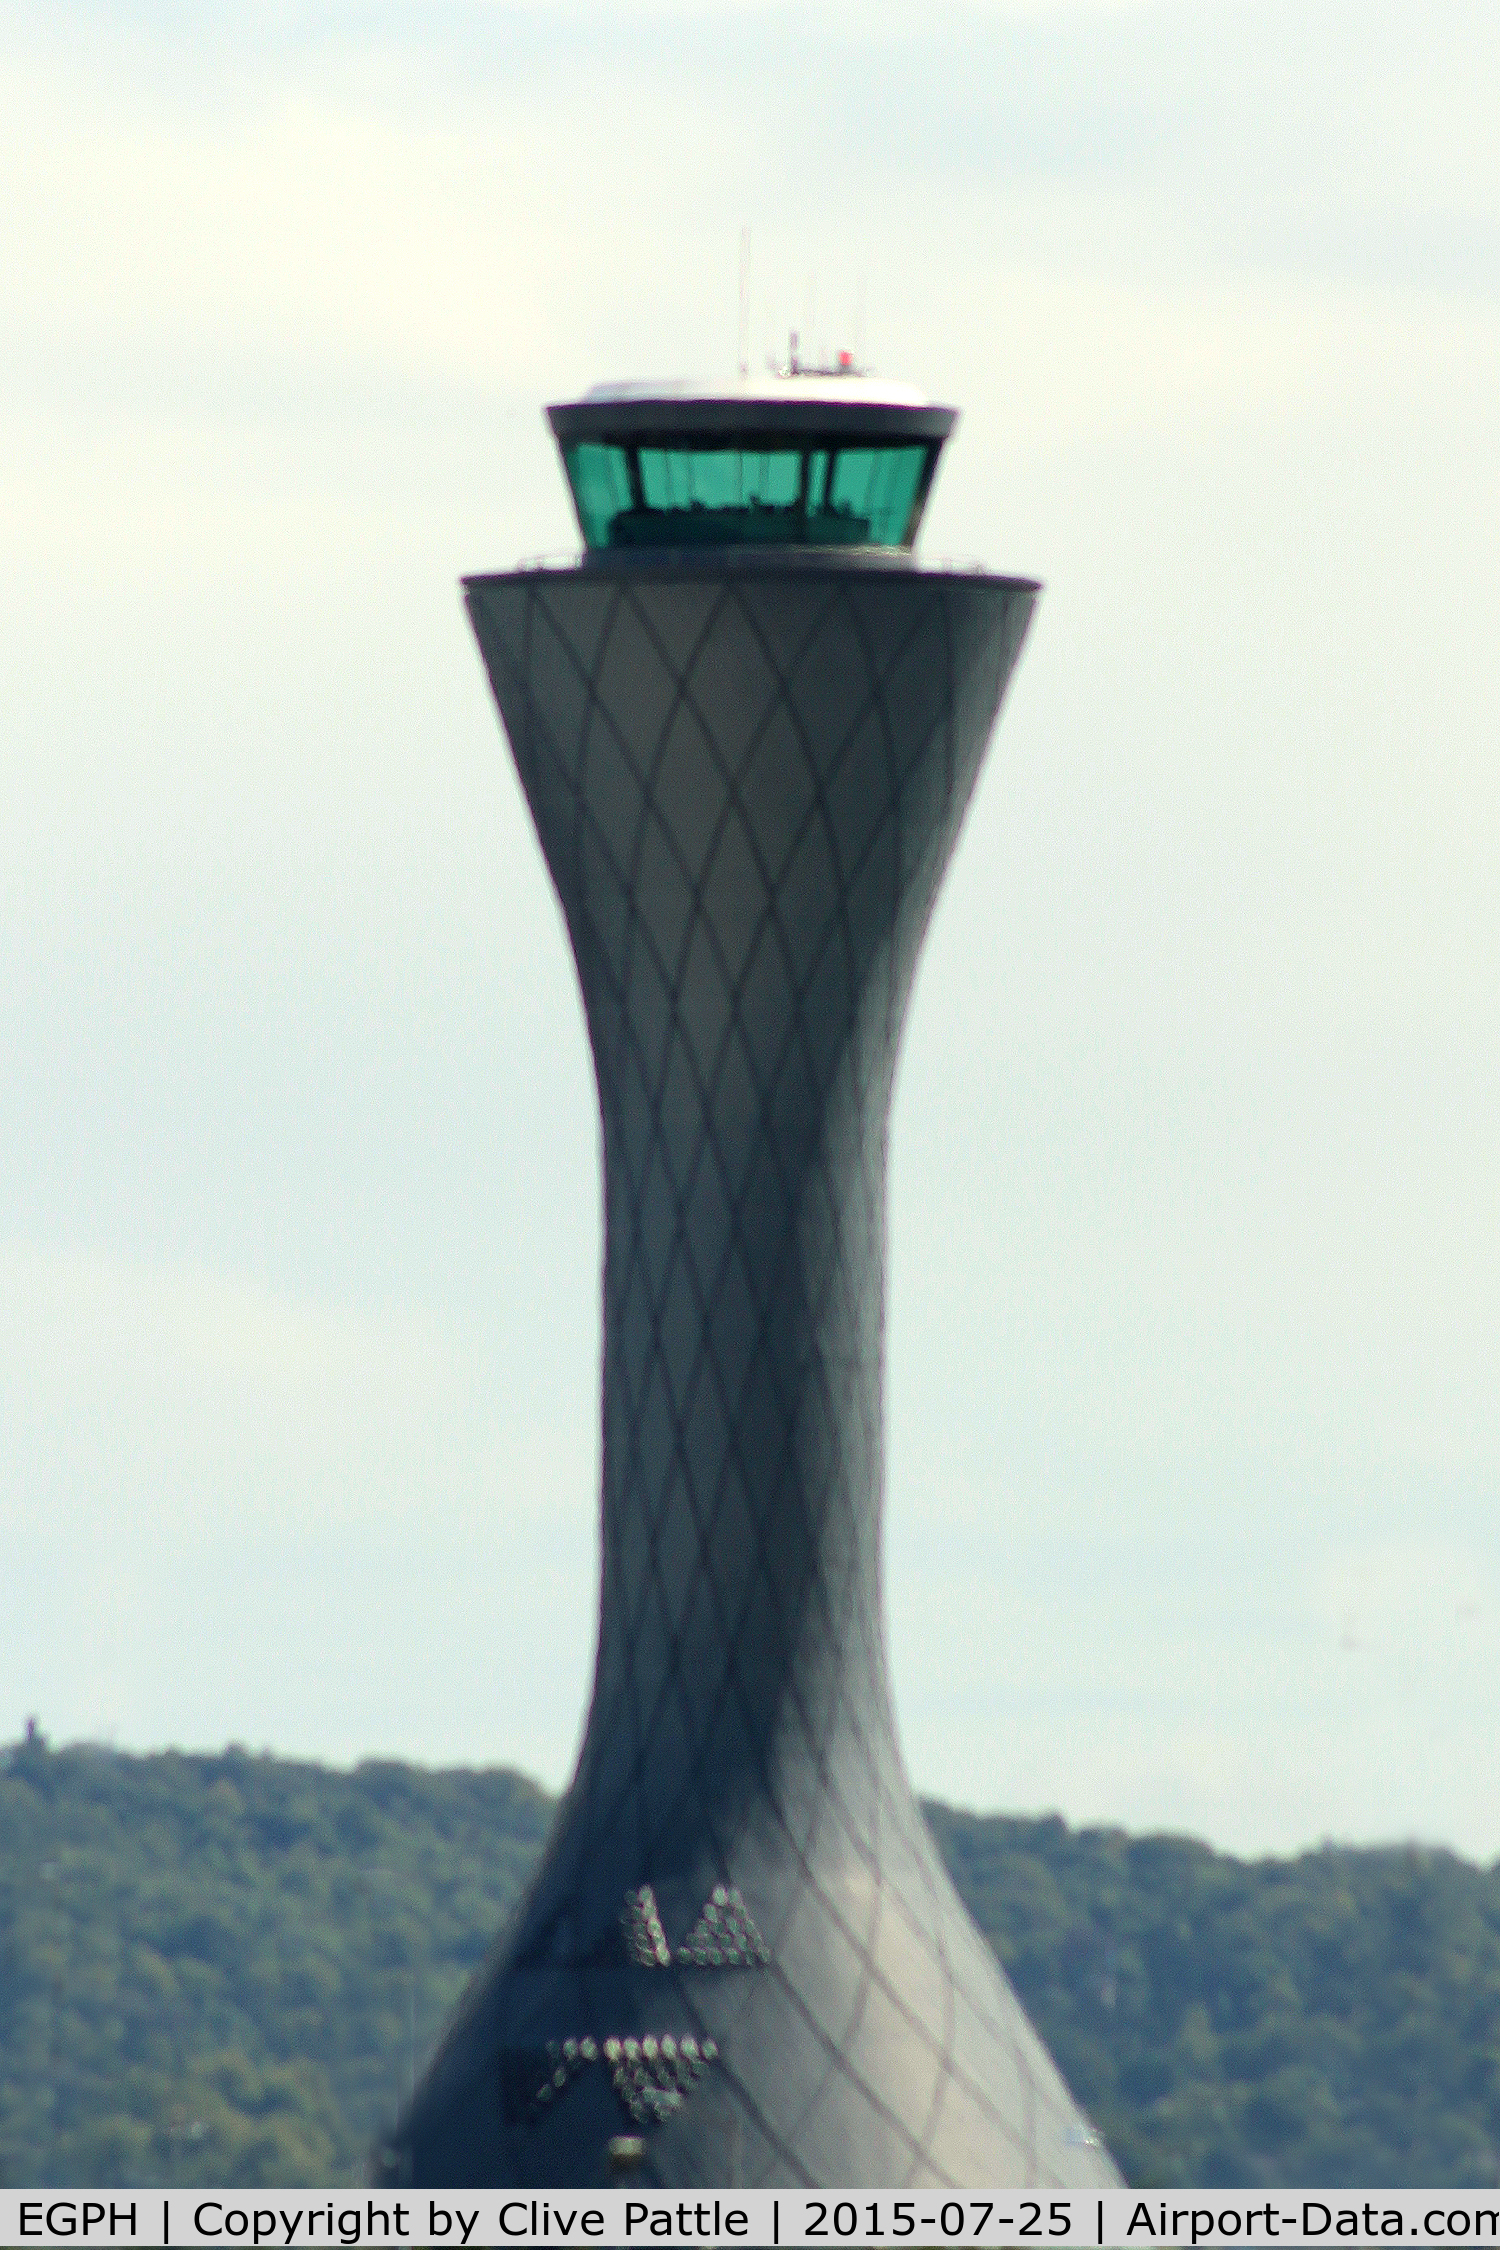 Edinburgh Airport, Edinburgh, Scotland United Kingdom (EGPH) - The distinctive tower at Edinburgh EGPH